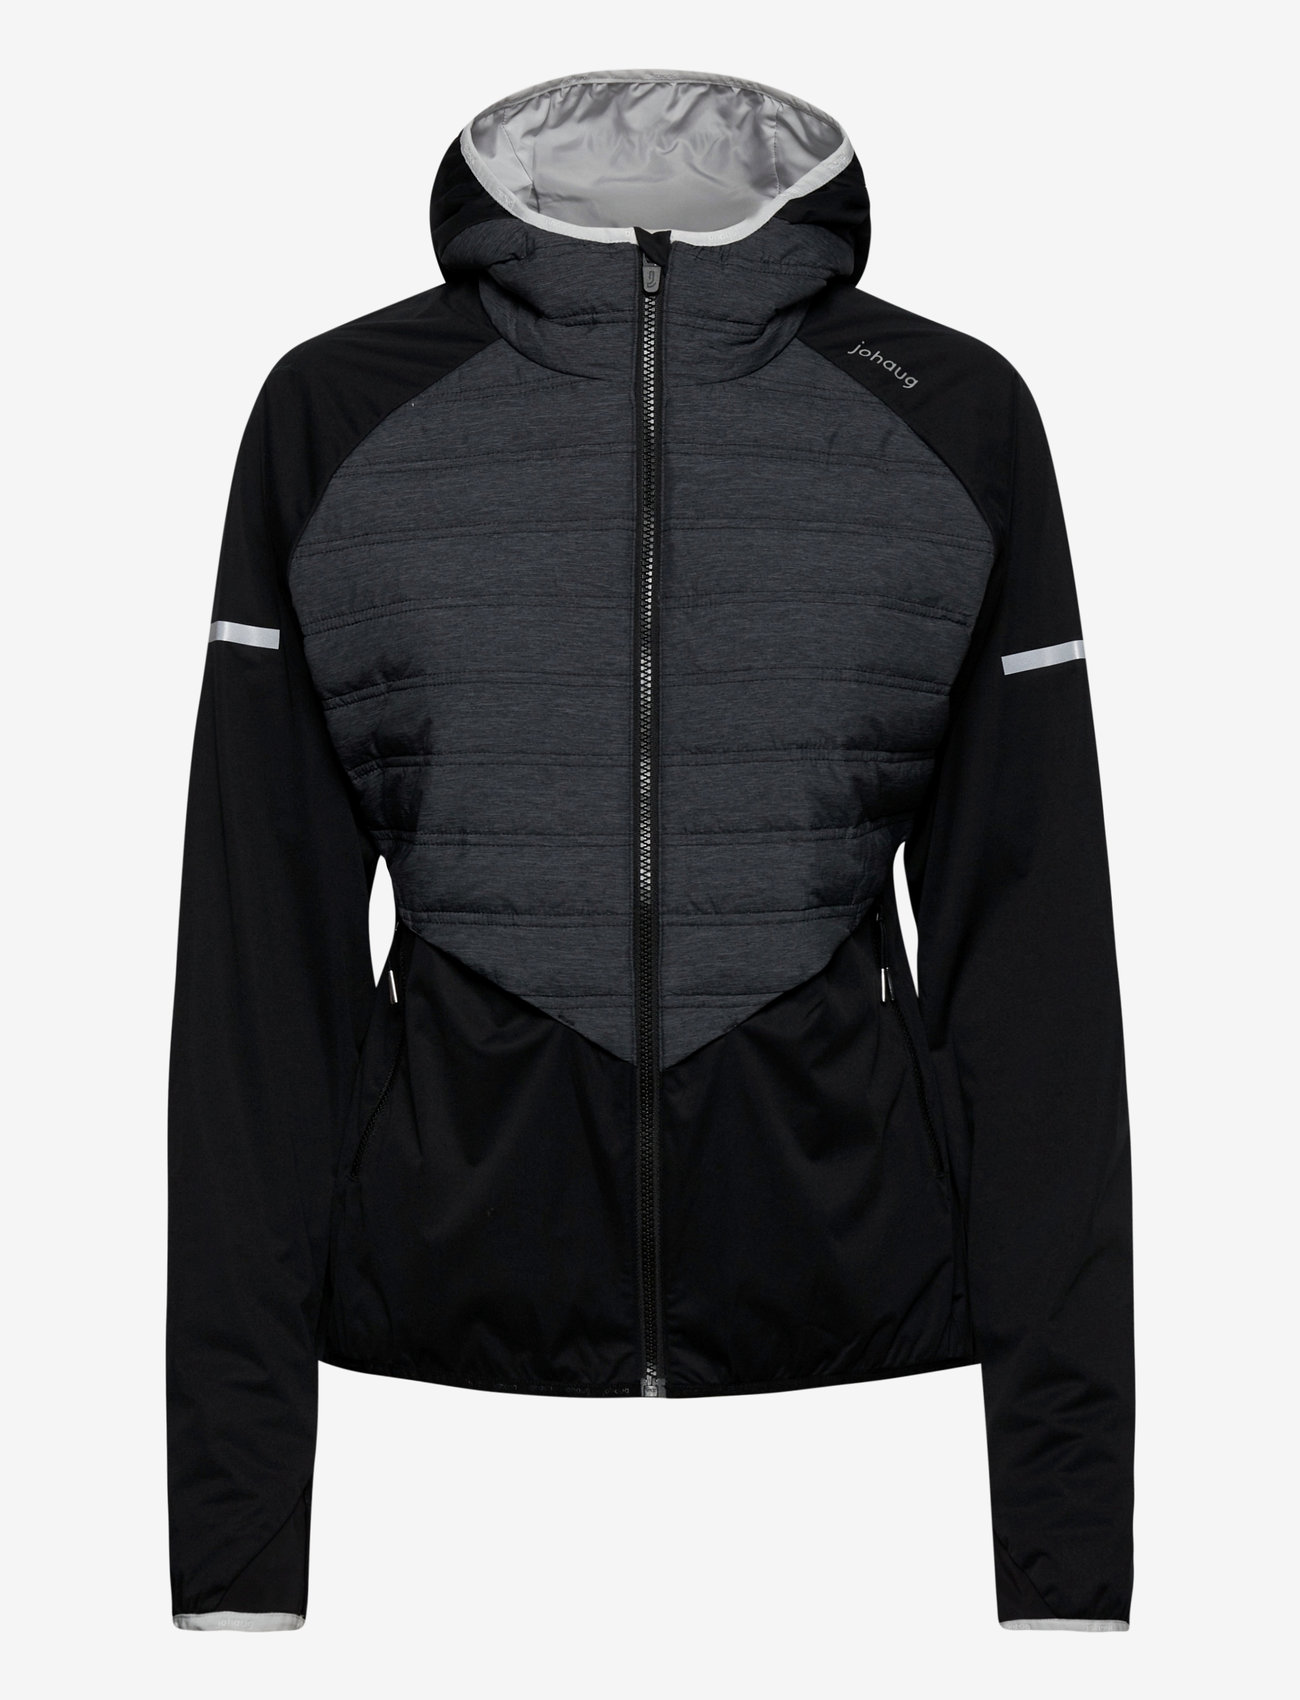 Johaug - Concept Jacket - allværsjakker & regnjakker - tblck - 0